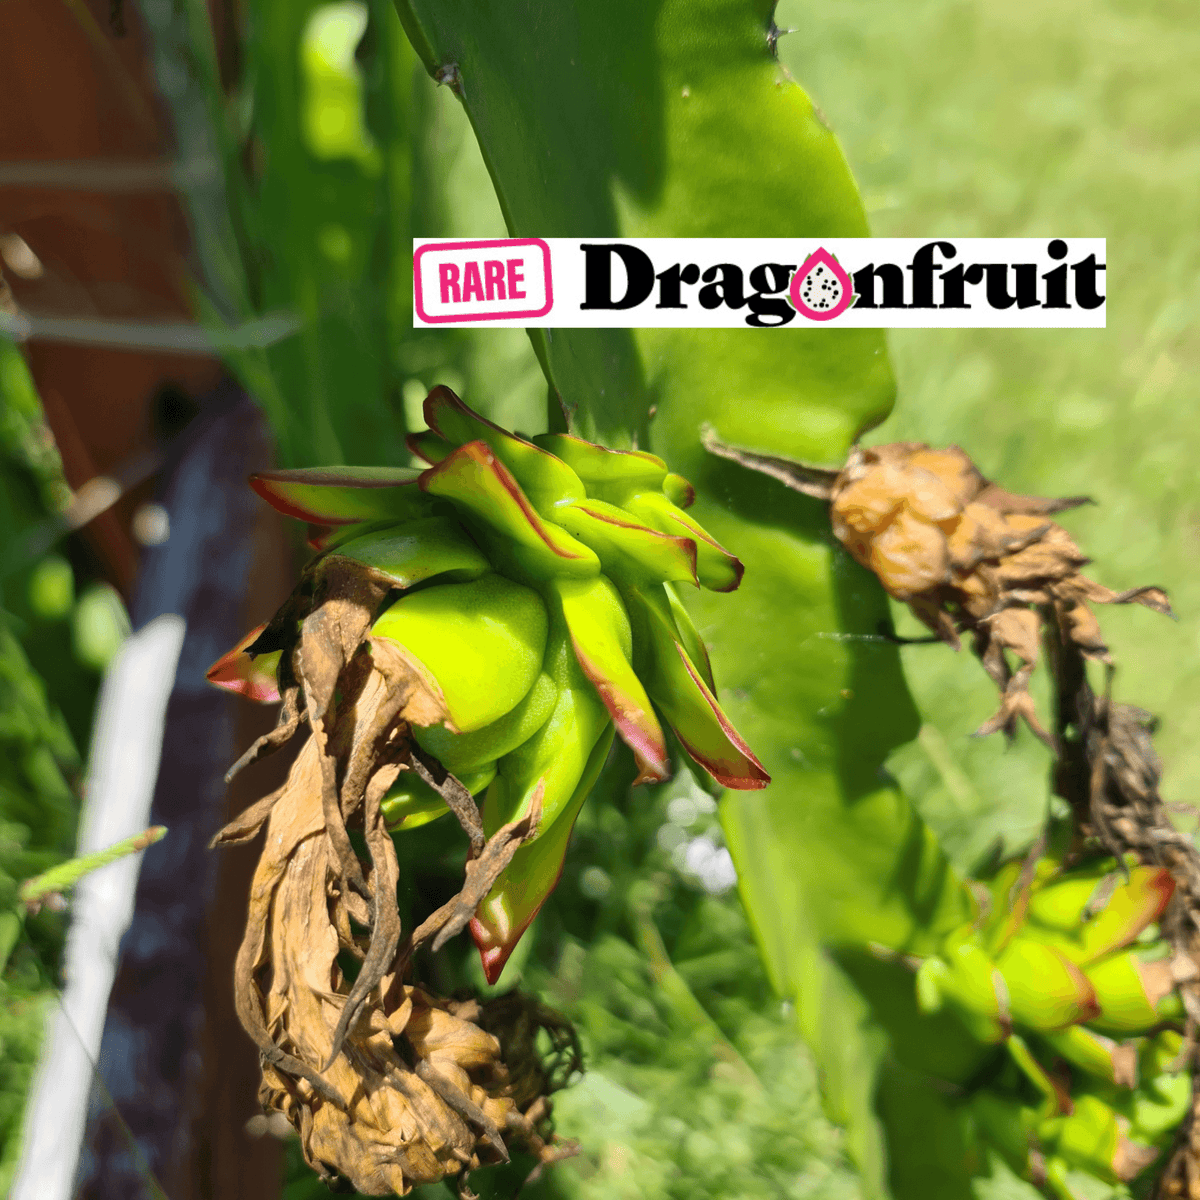 Asunta 2 – H. stenopterus X H. guatemalensis hybrid Mexican Dragon Fruit Variety - Rare Dragon Fruit